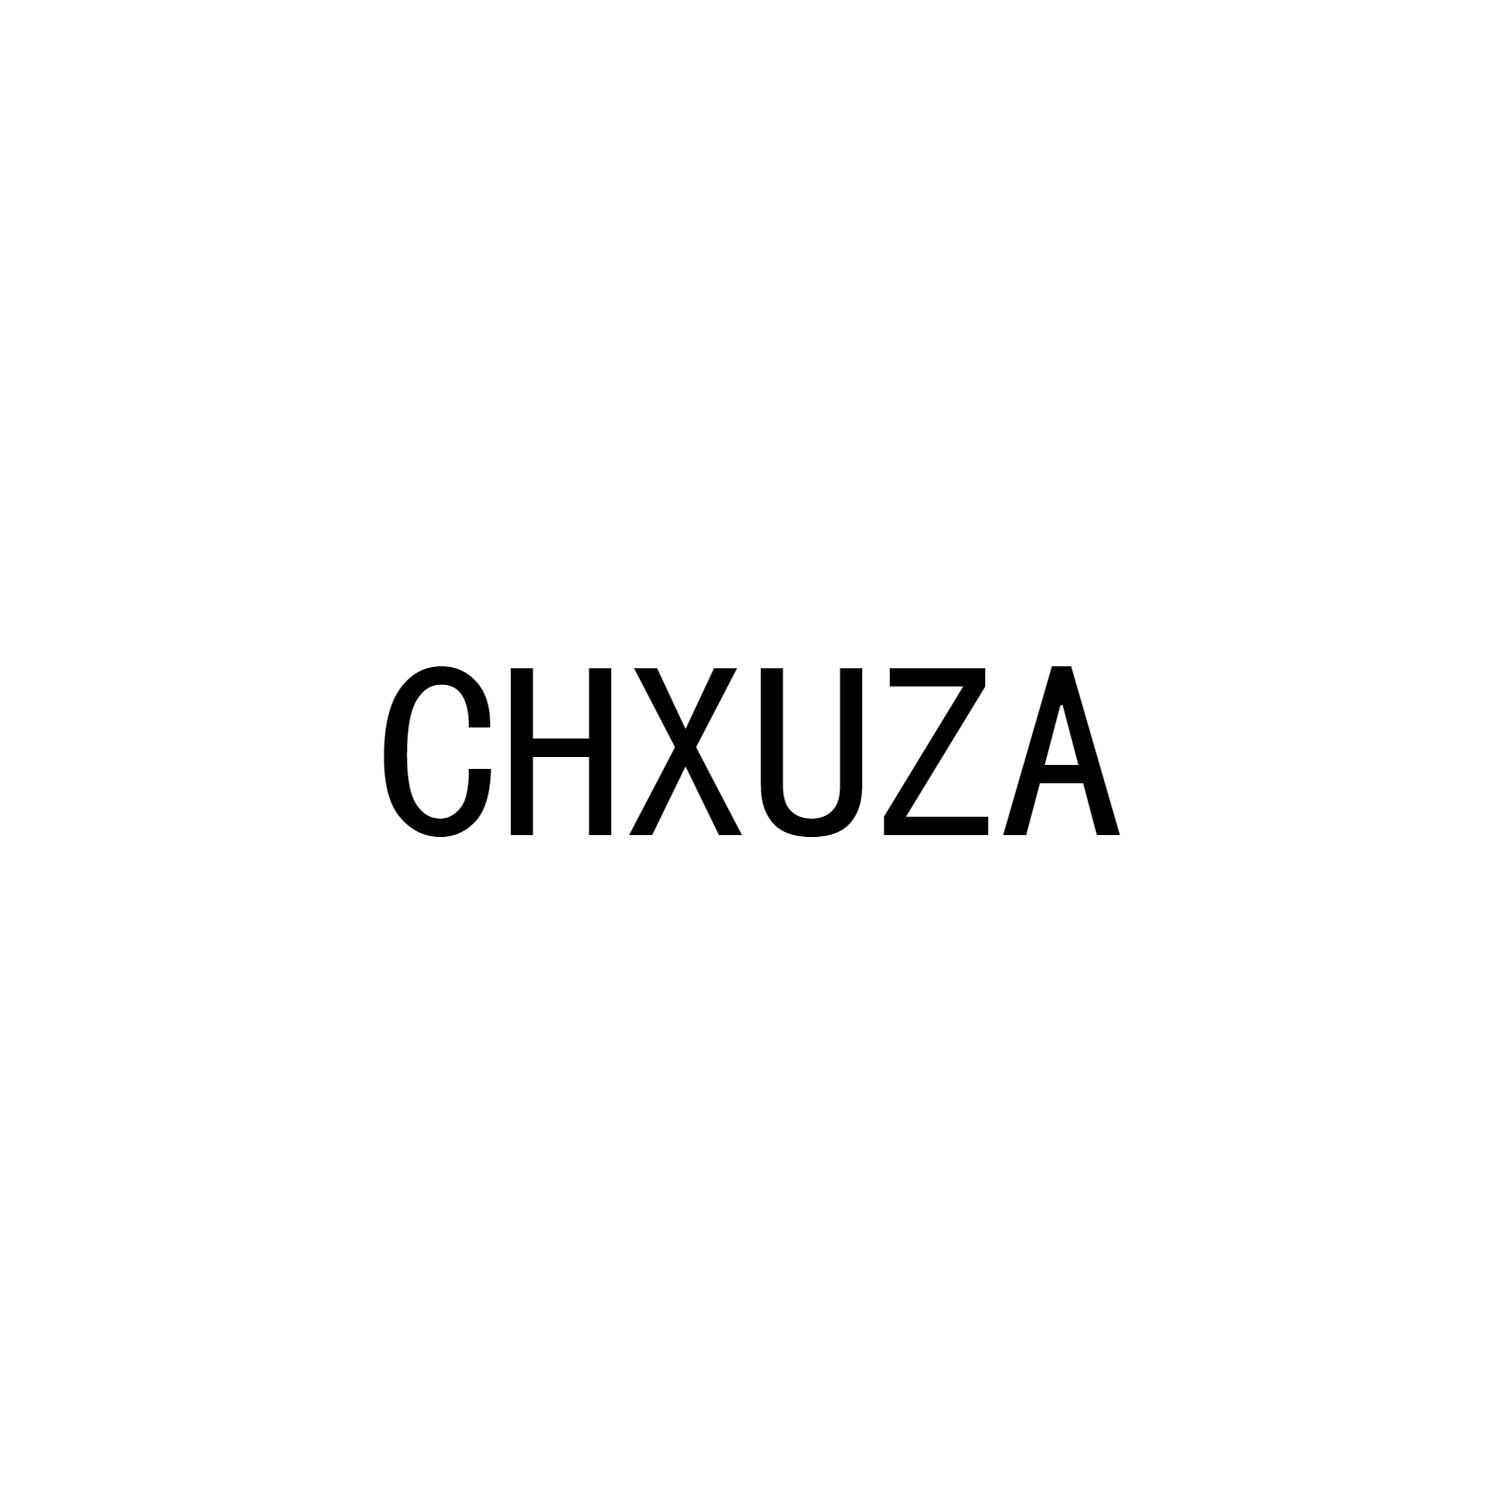 CHXUZA